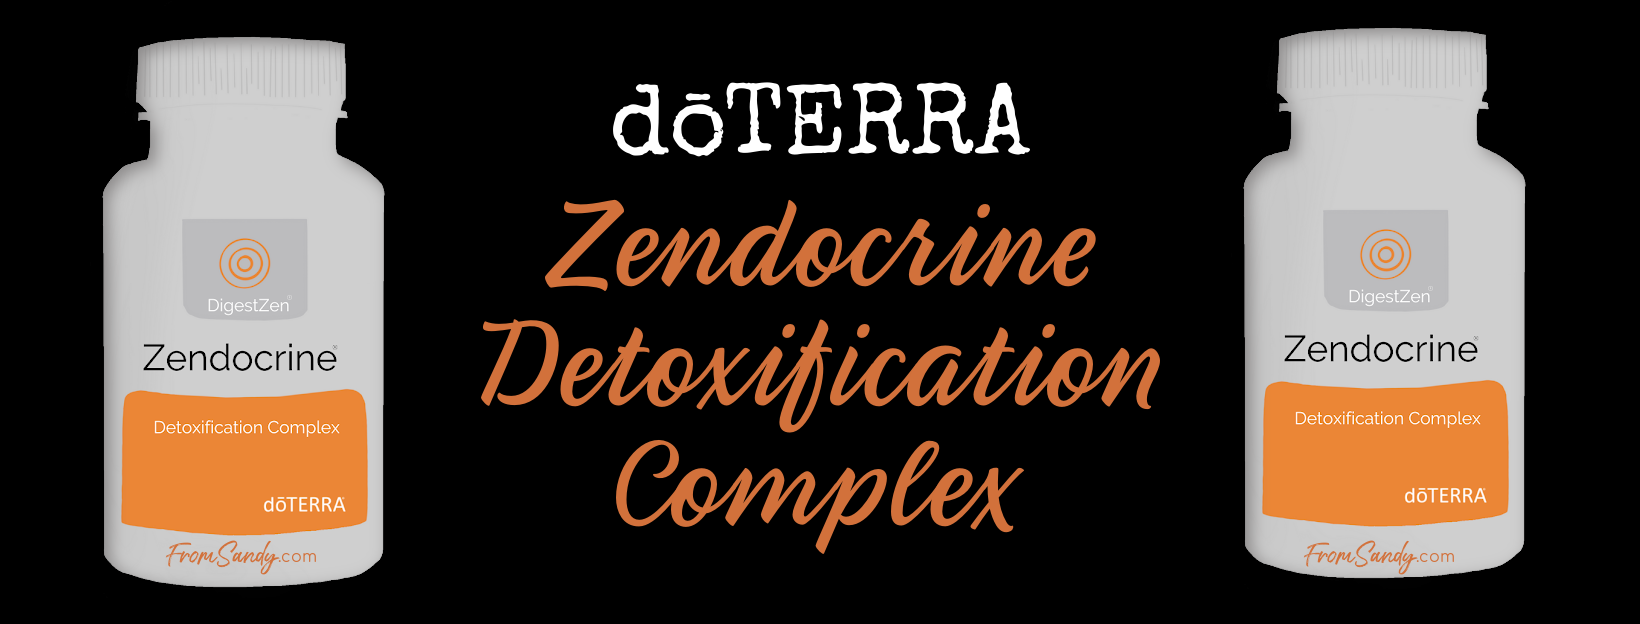 dōTERRA Zendocrine Detoxification Complex | From Sandy